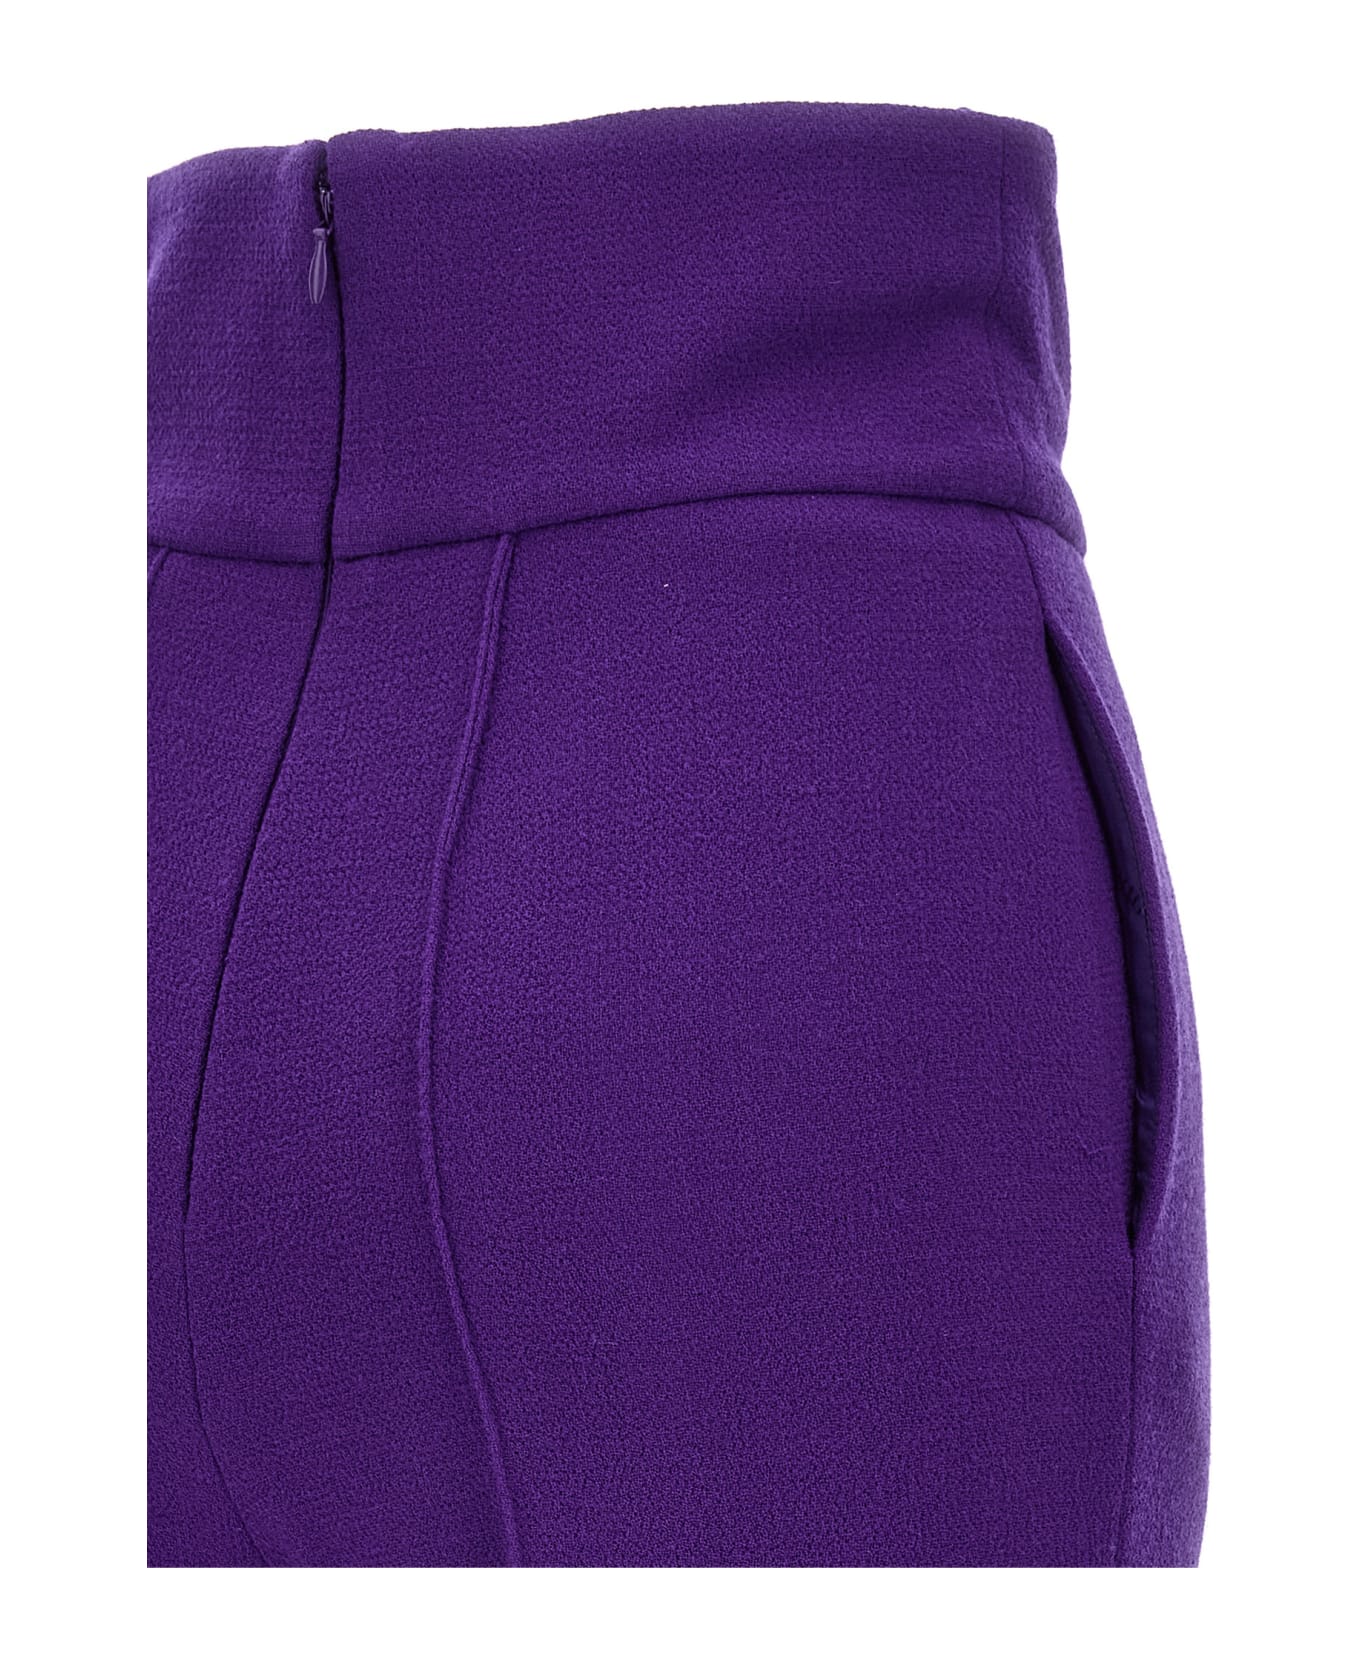 Alexandre Vauthier Tailored Trousers - Purple